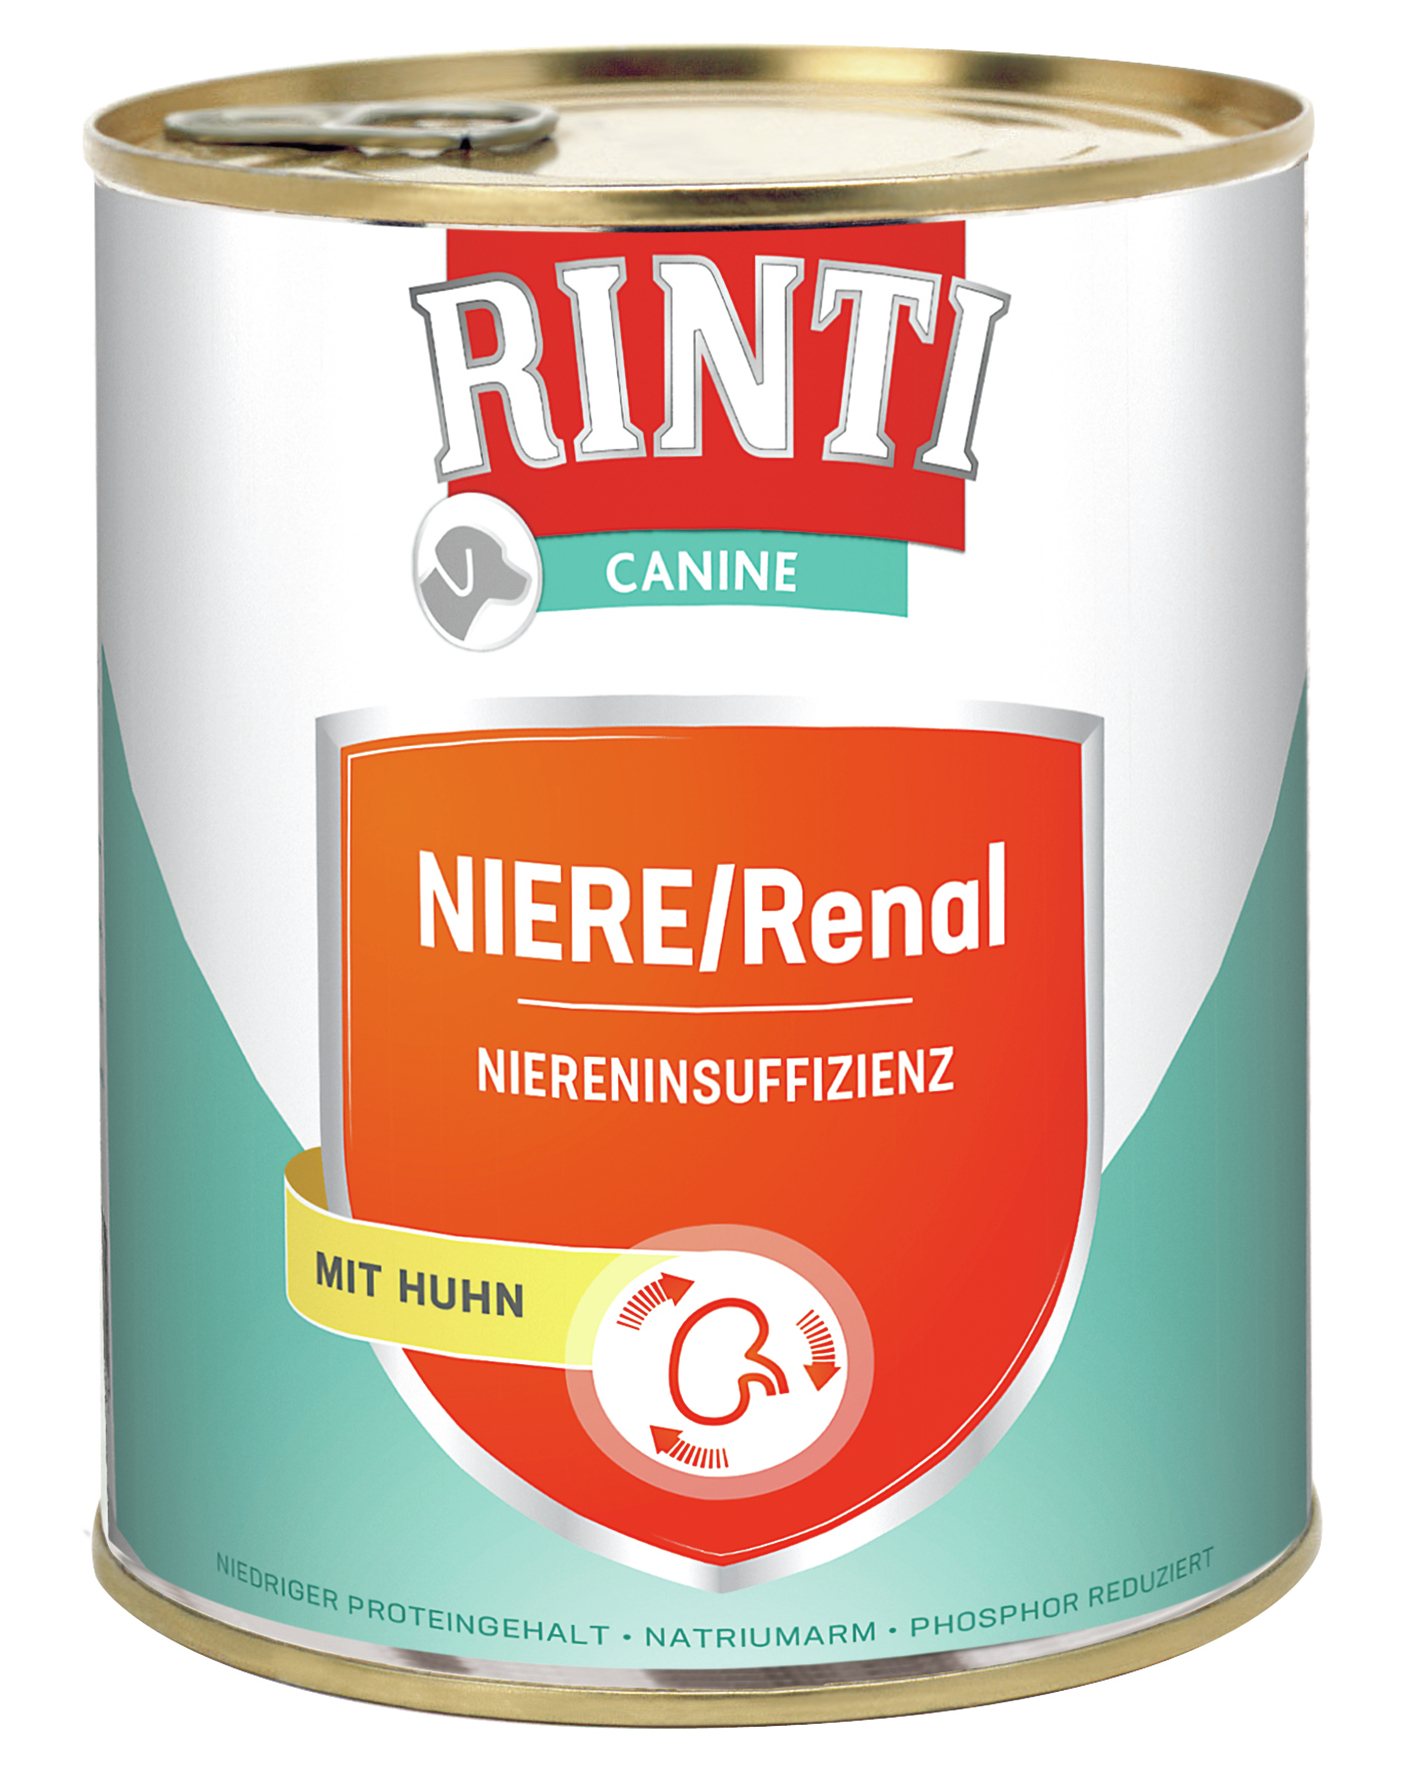  - MÜNSTER Fin Rinti DS Canine Niere/RenalHuhn800g 